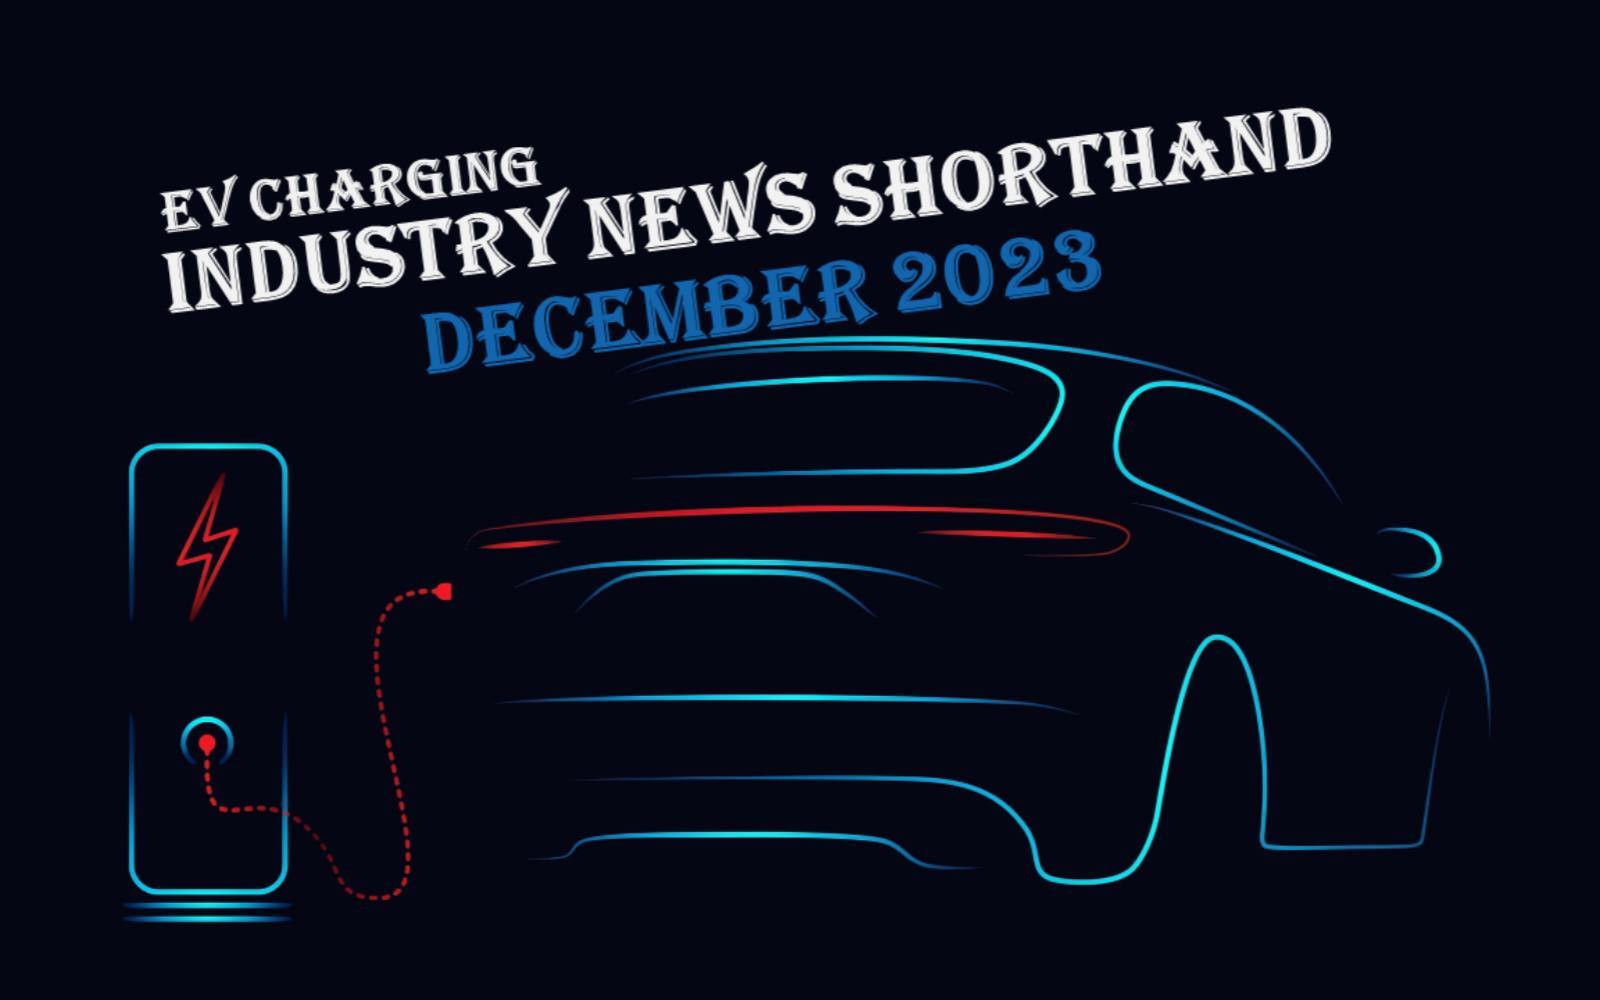 December 2023 EV charging industry news summary